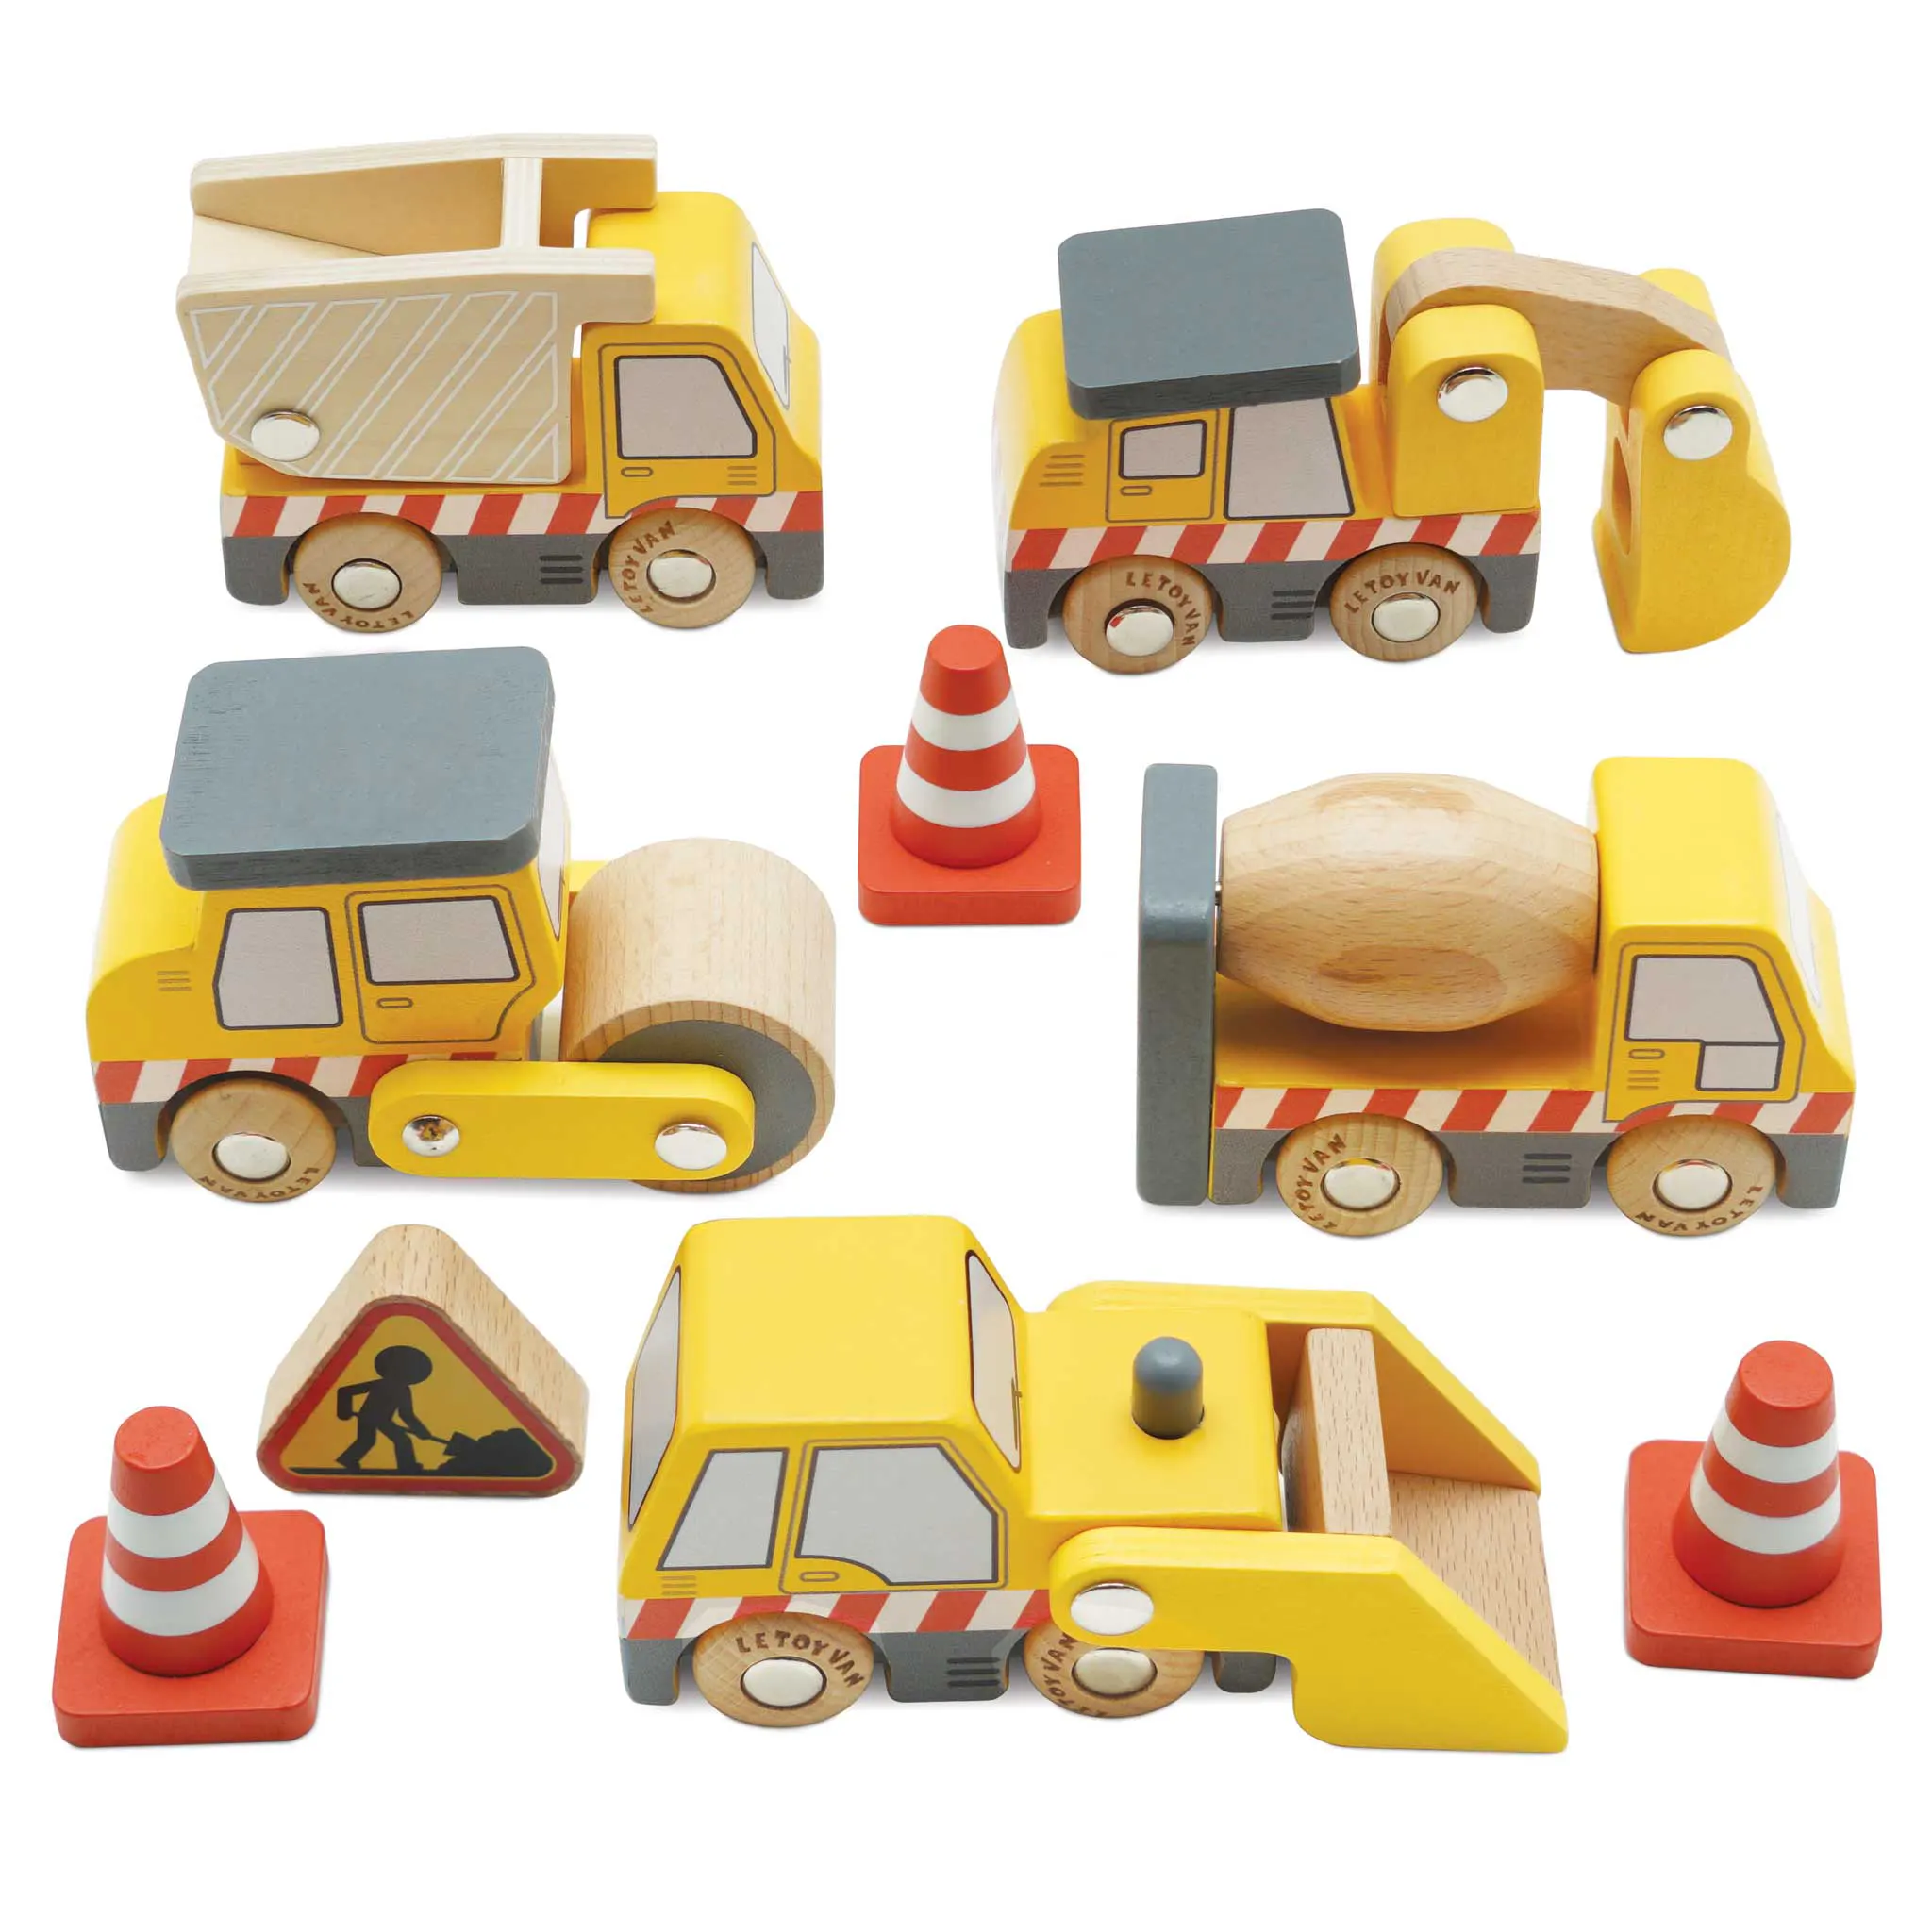 Baufahrzeuge / Construction Toy Cars, Trucks & Diggers (New Look)